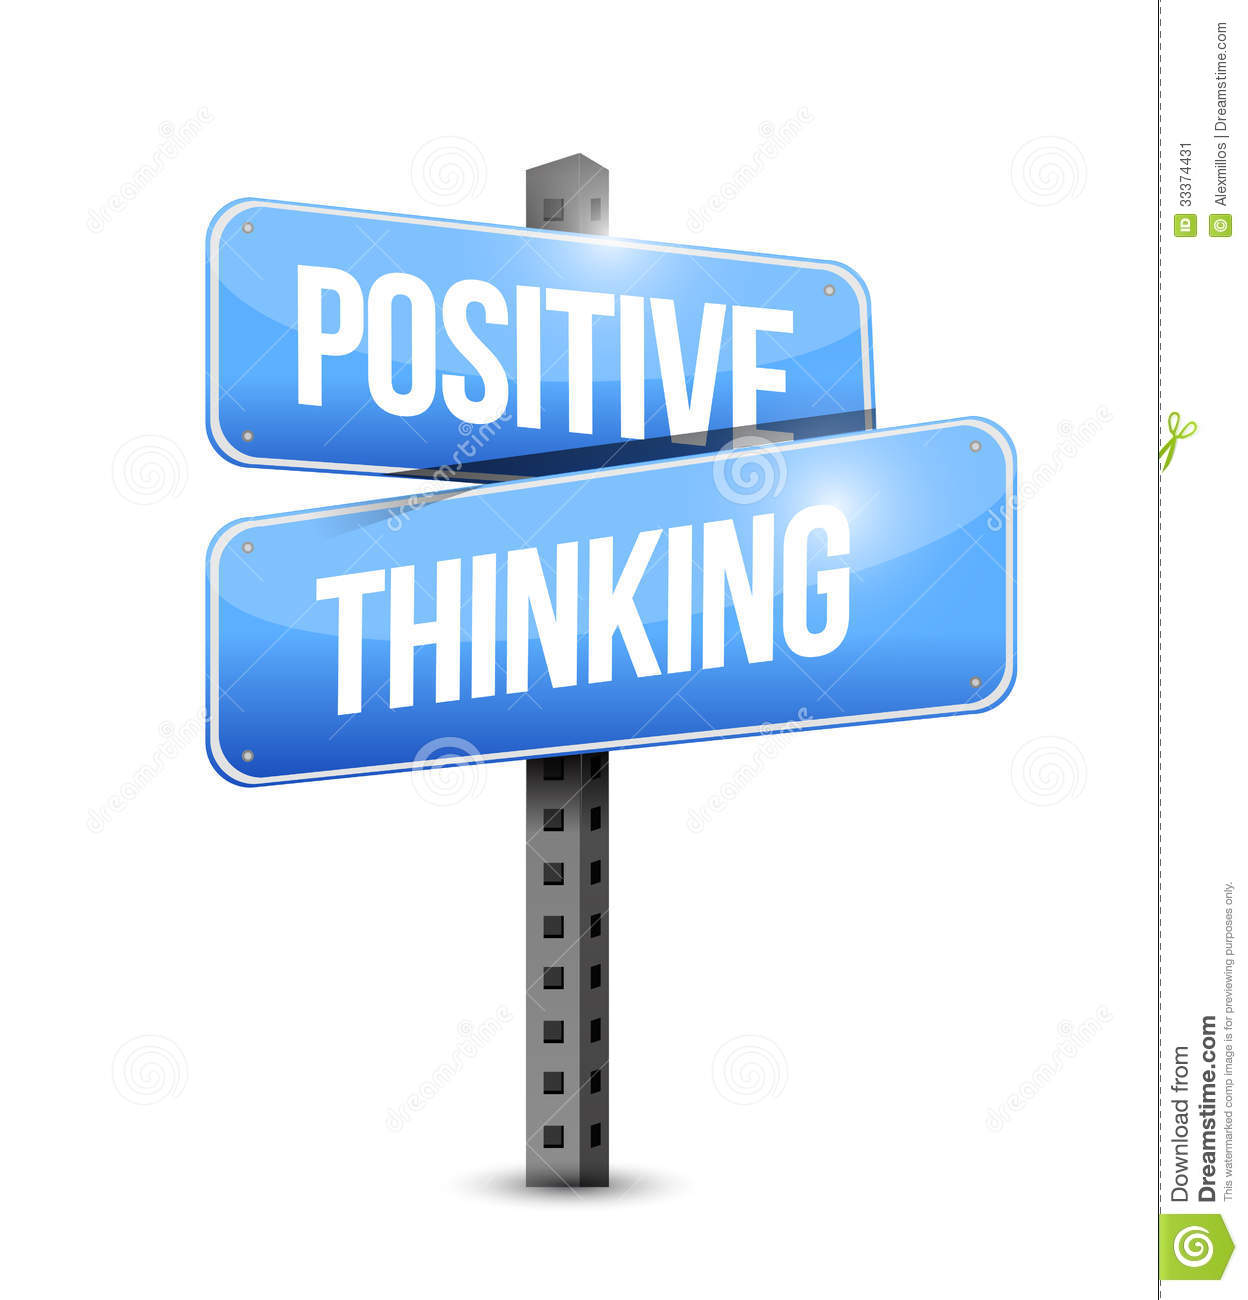 Positive Thinking Road Sign Stock Image   Image  33374431